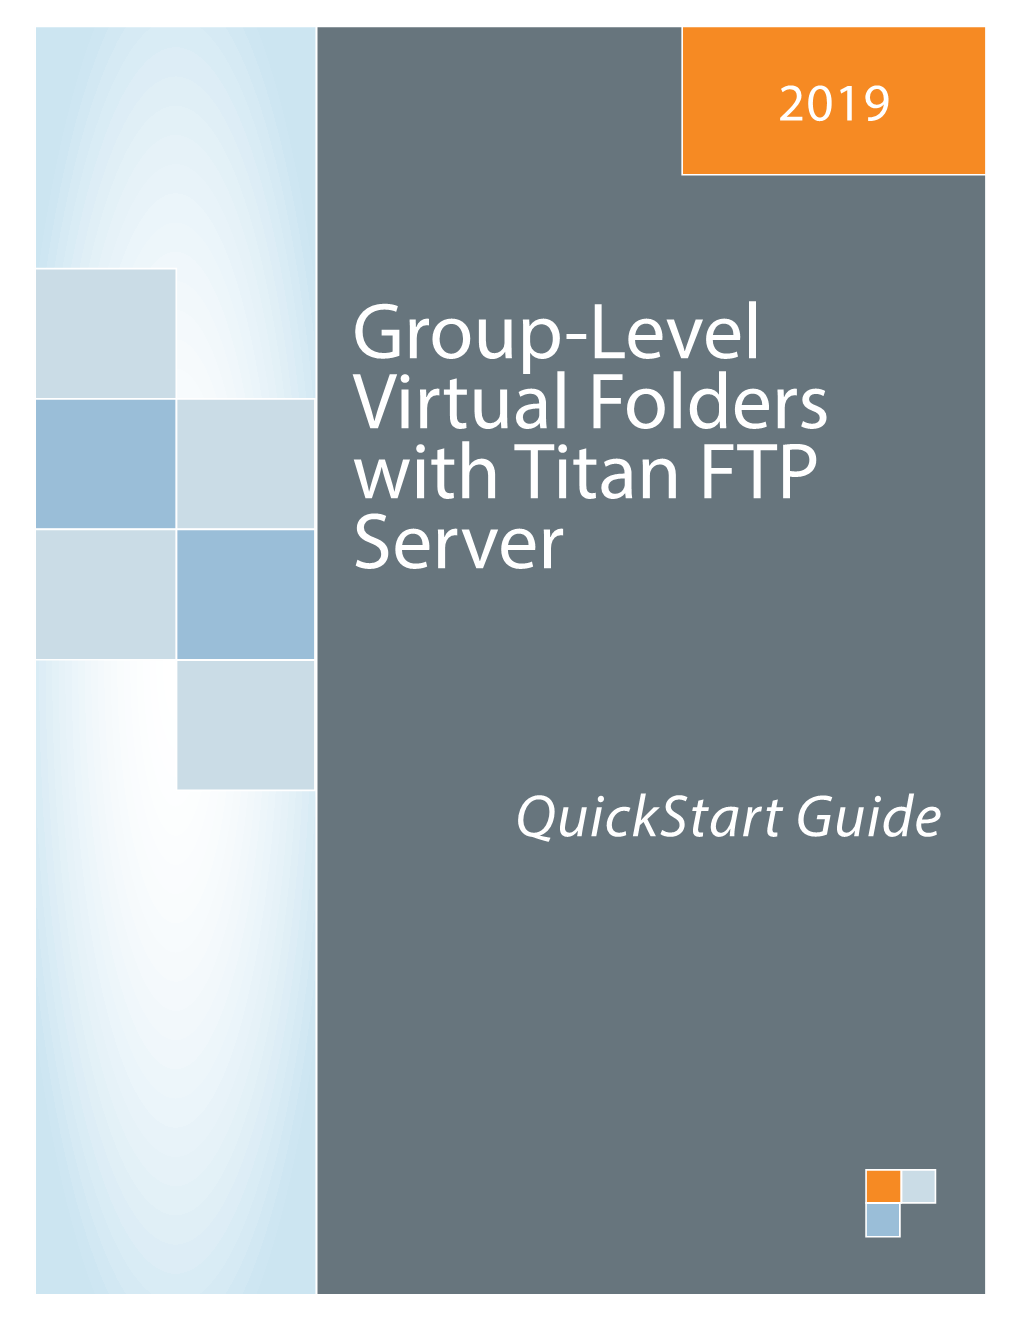 Group-Level Virtual Folders with Titan FTP Server